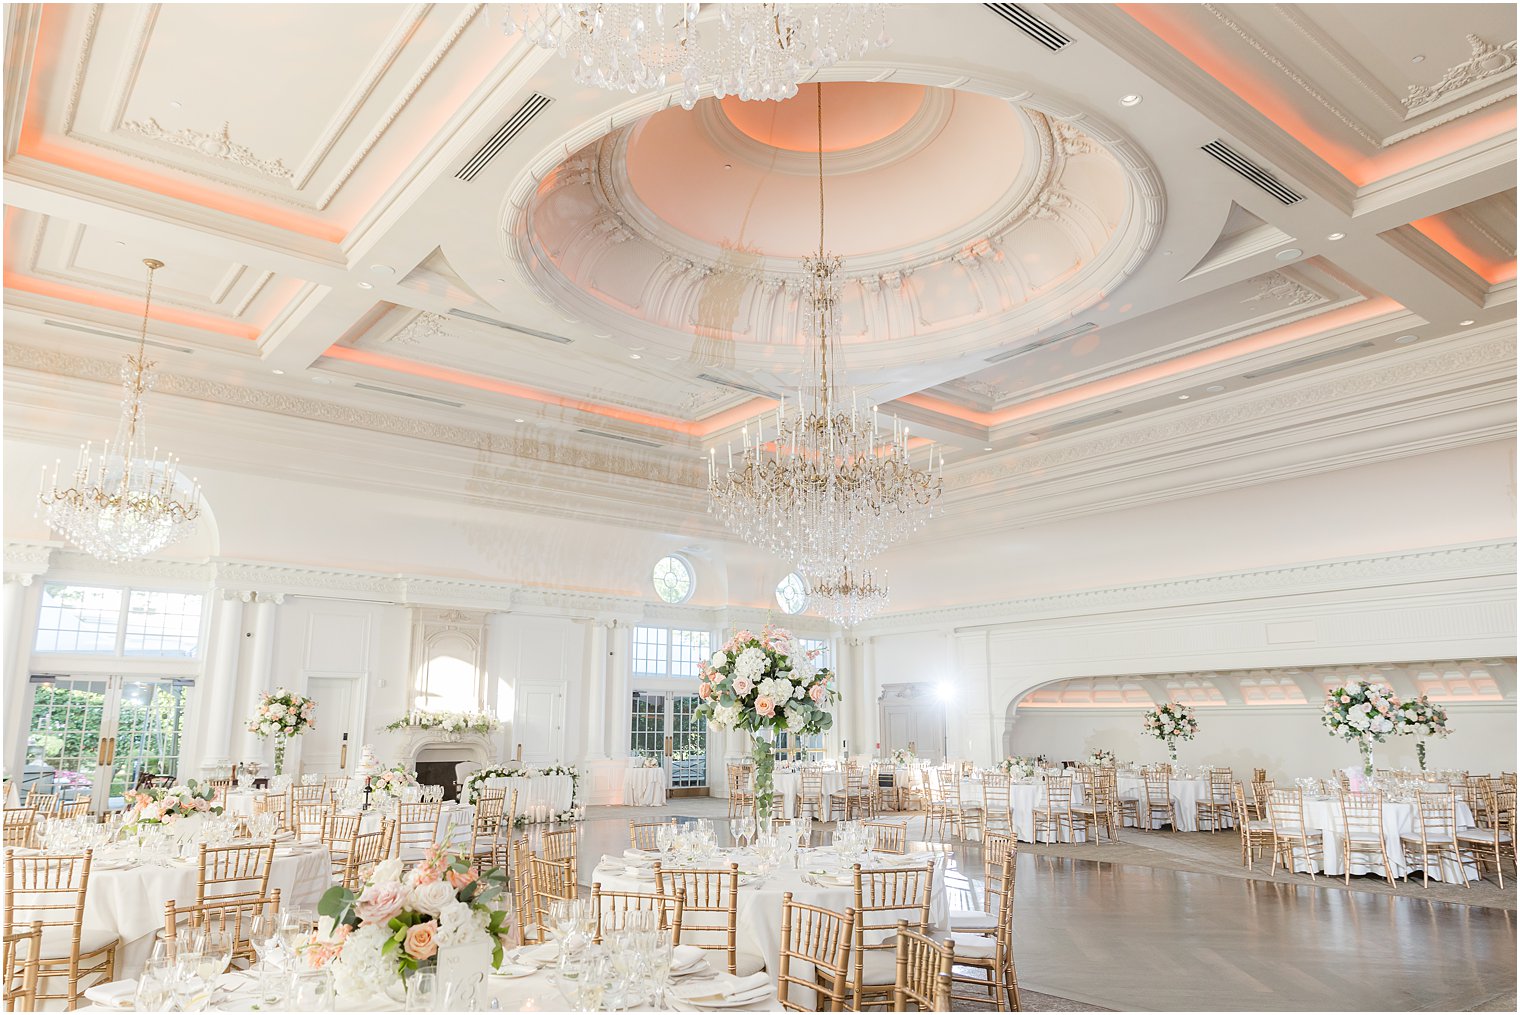 Park Chateau Estate wedding reception in ballroom